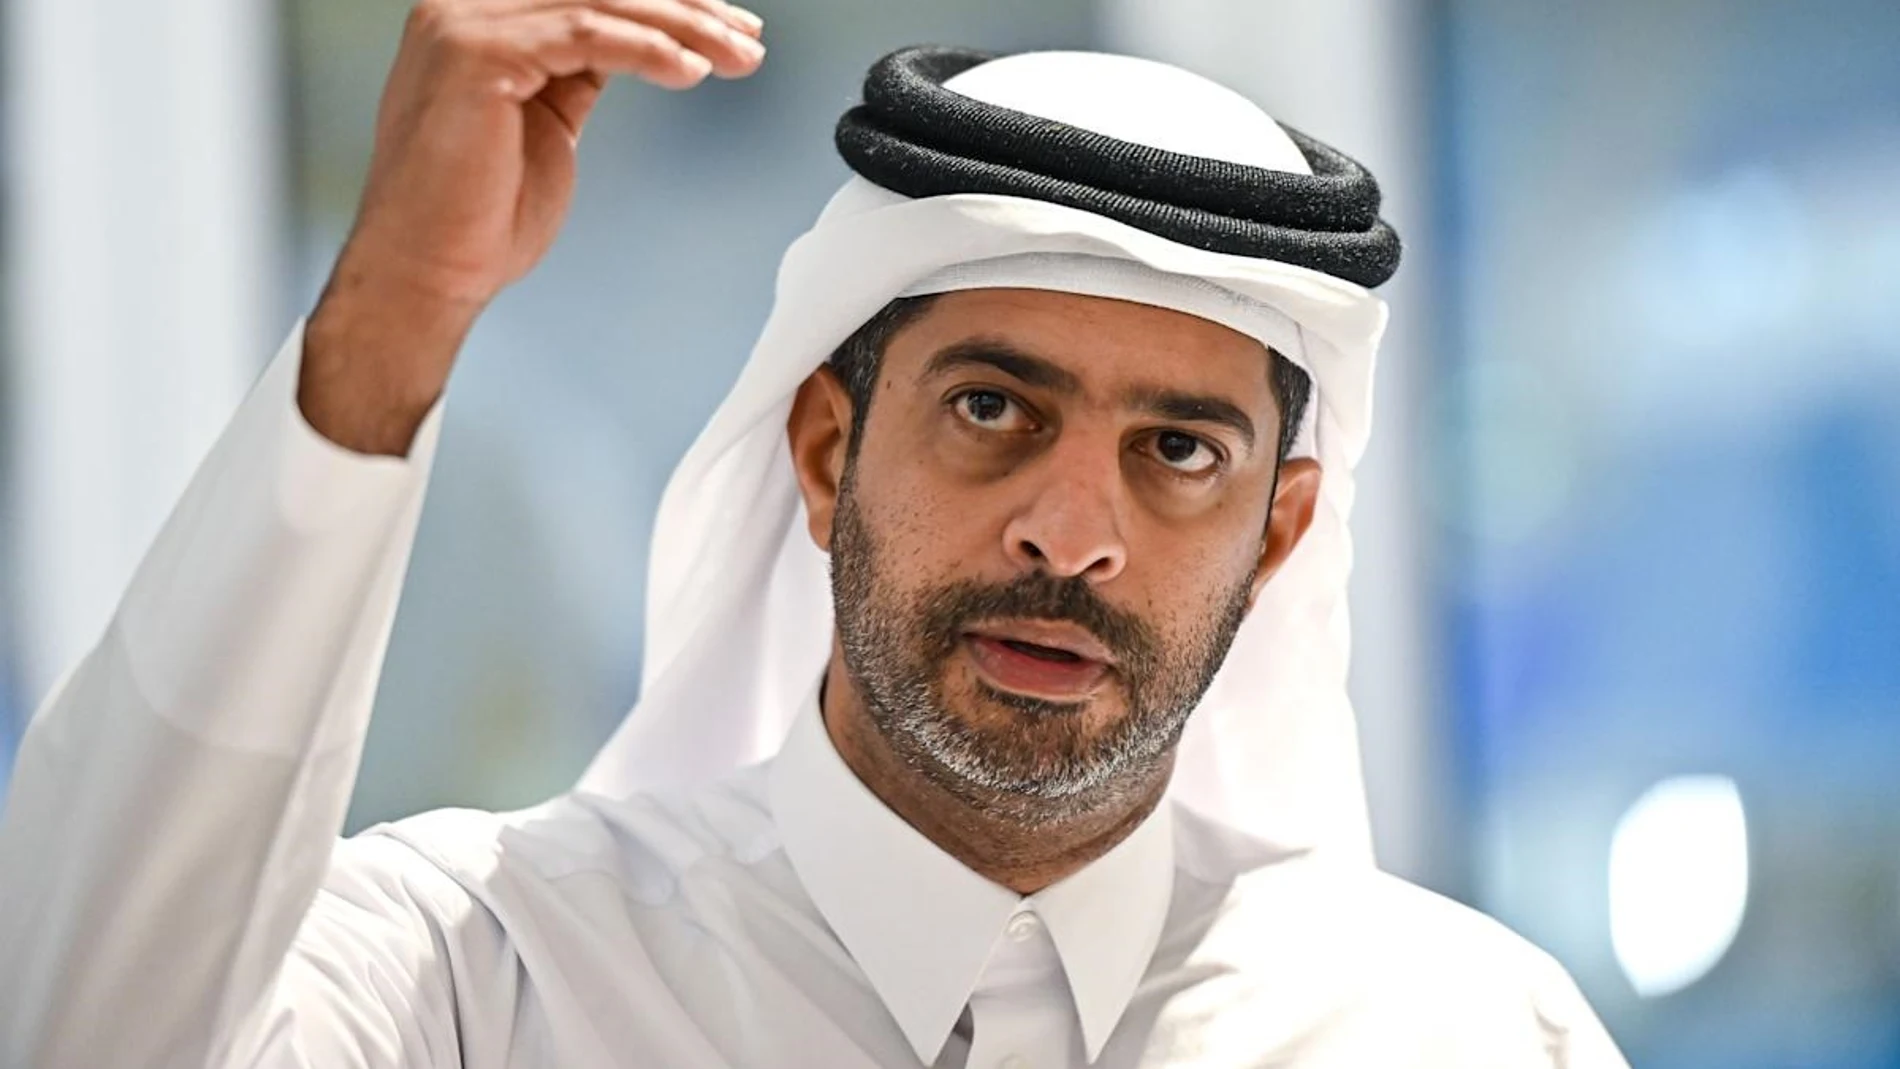 El presidente del Comité organizador del Mundial de Qatar 2022, Nasser Al-Khater